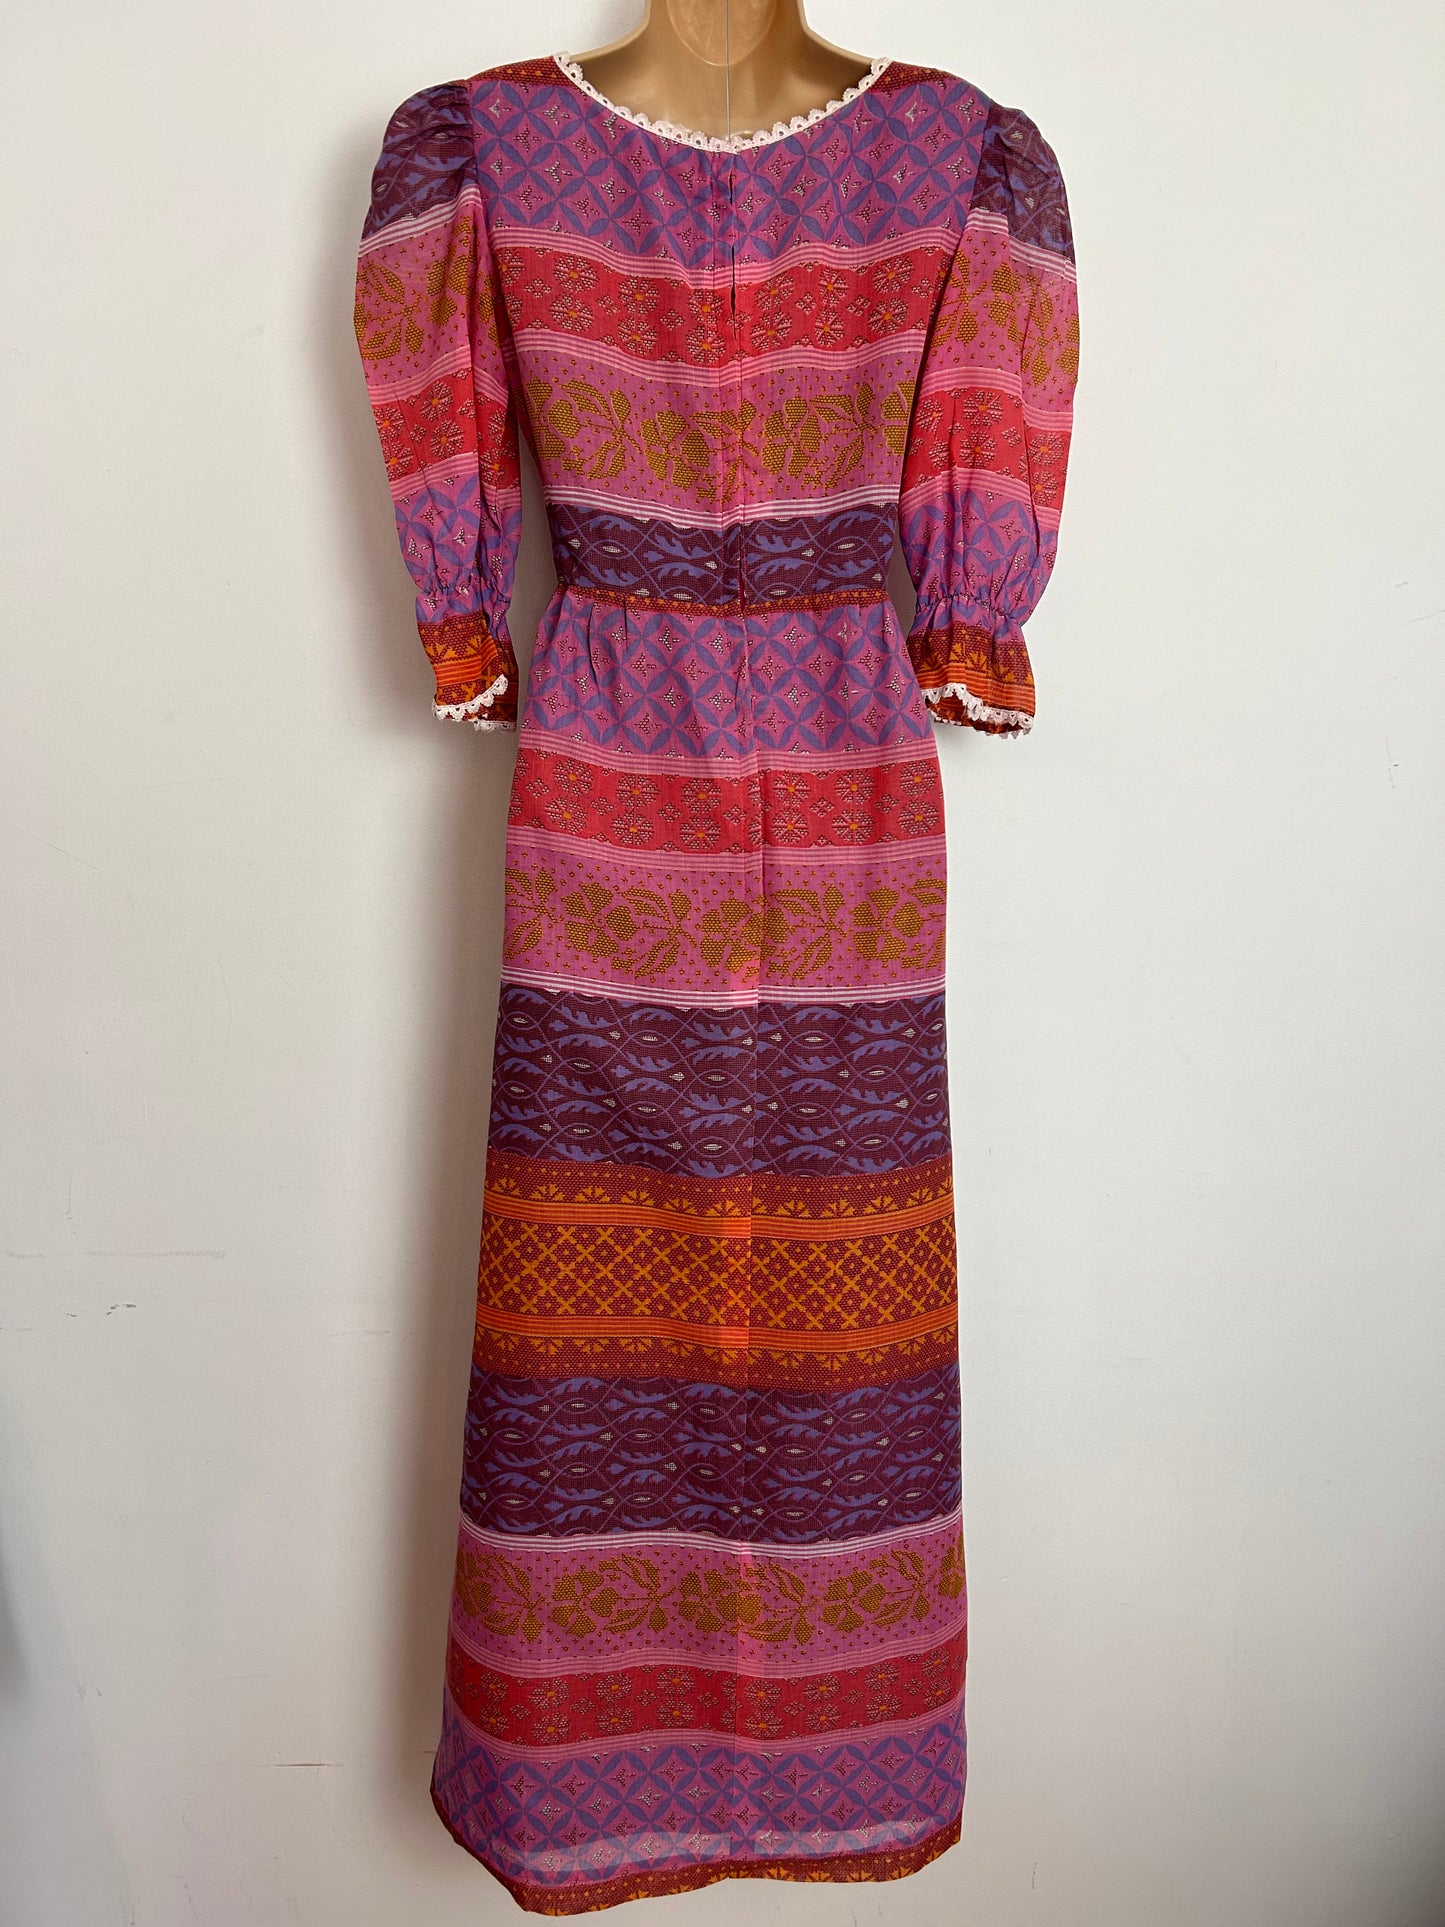 Vintage 1970s UK Size 6 Pink Lilac & Orange Abstract Print 3/4 Sleeve Cotton Mix Prairie Boho Maxi Dress